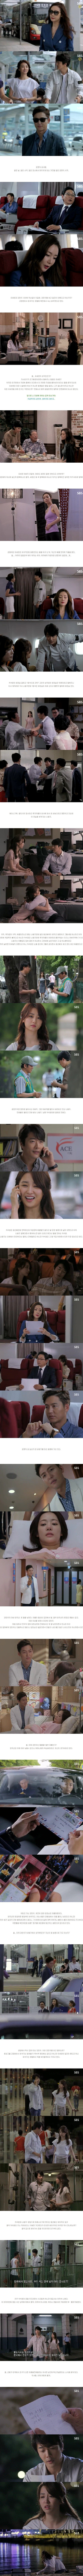 episode 1 captures for the Korean drama 'Temptation'